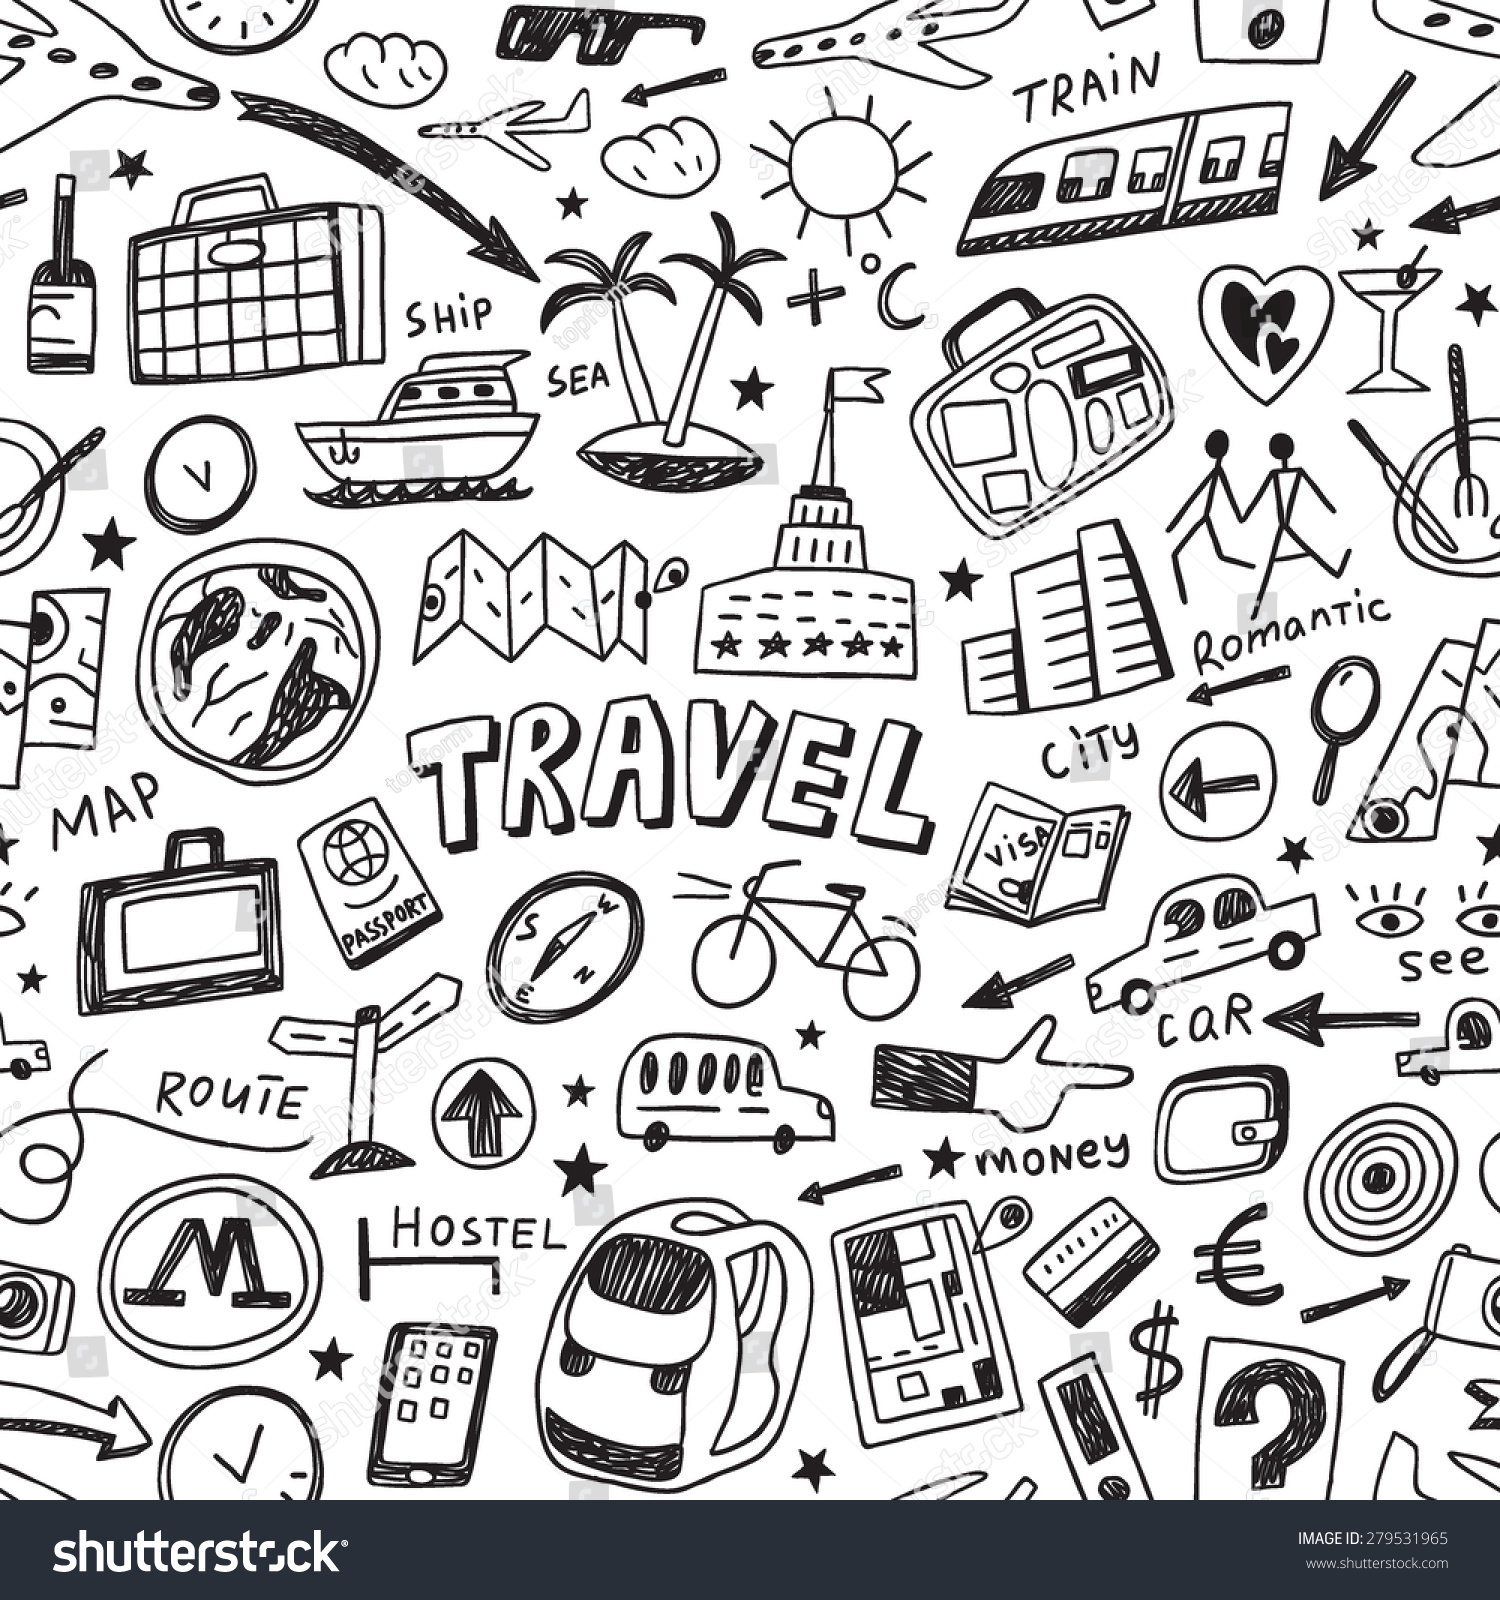 Travel Seamless Vector Background - 279531965 : Shutterstock